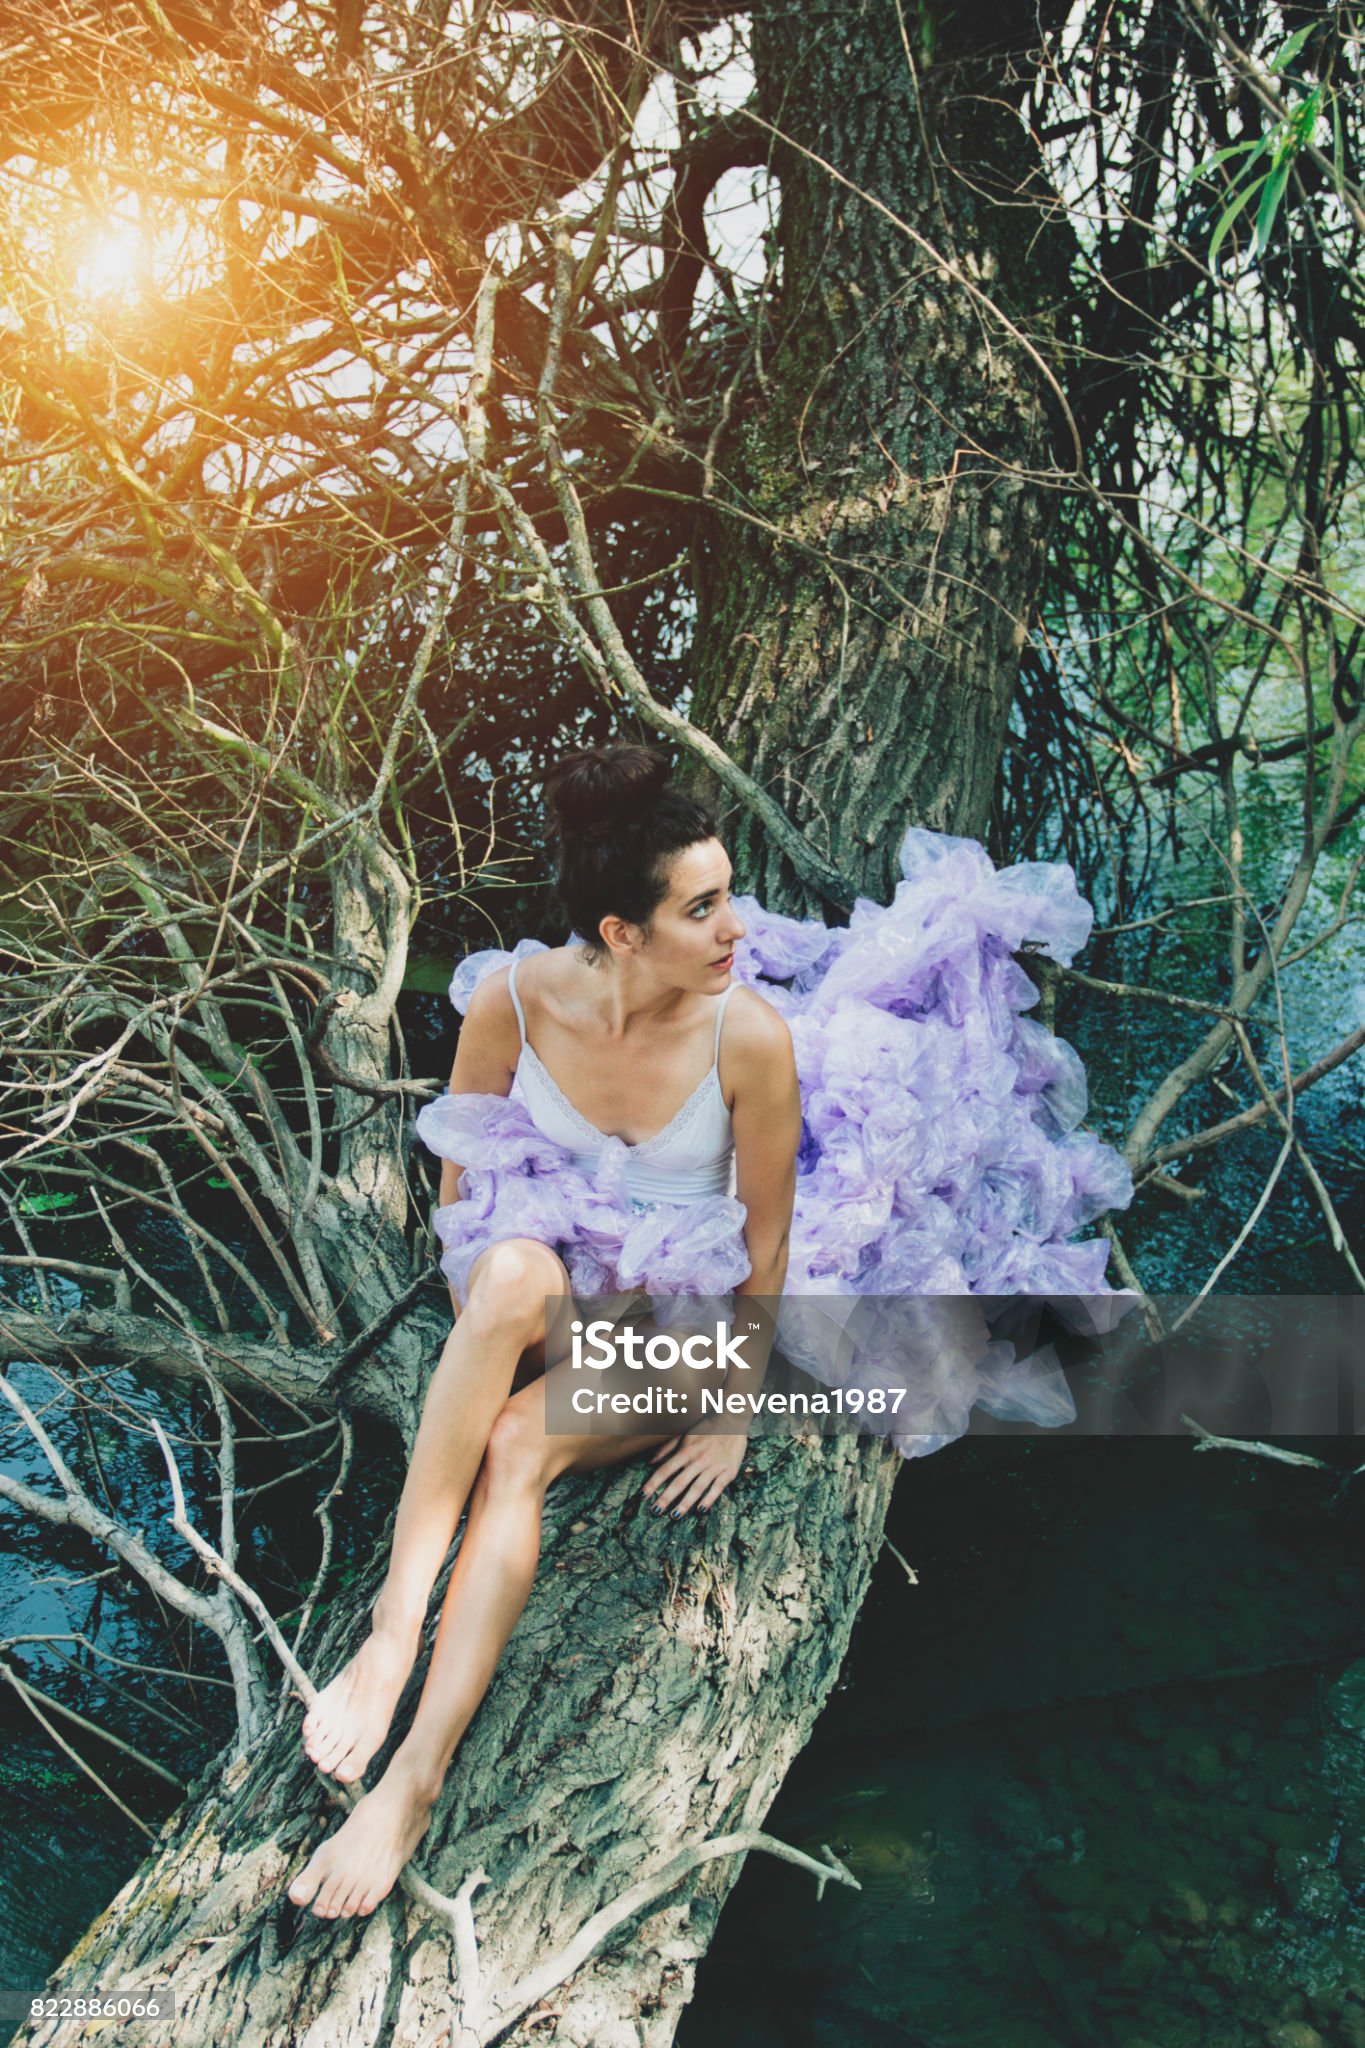 https://media.istockphoto.com/id/822886066/photo/woman-wearing-fashion-violet-dress.jpg?s=2048x2048&amp;w=is&amp;k=20&amp;c=rCxIDiyi8CR4xnOCkB_J8wu0Jp1Qb1m2aFxgBKOyq0k=